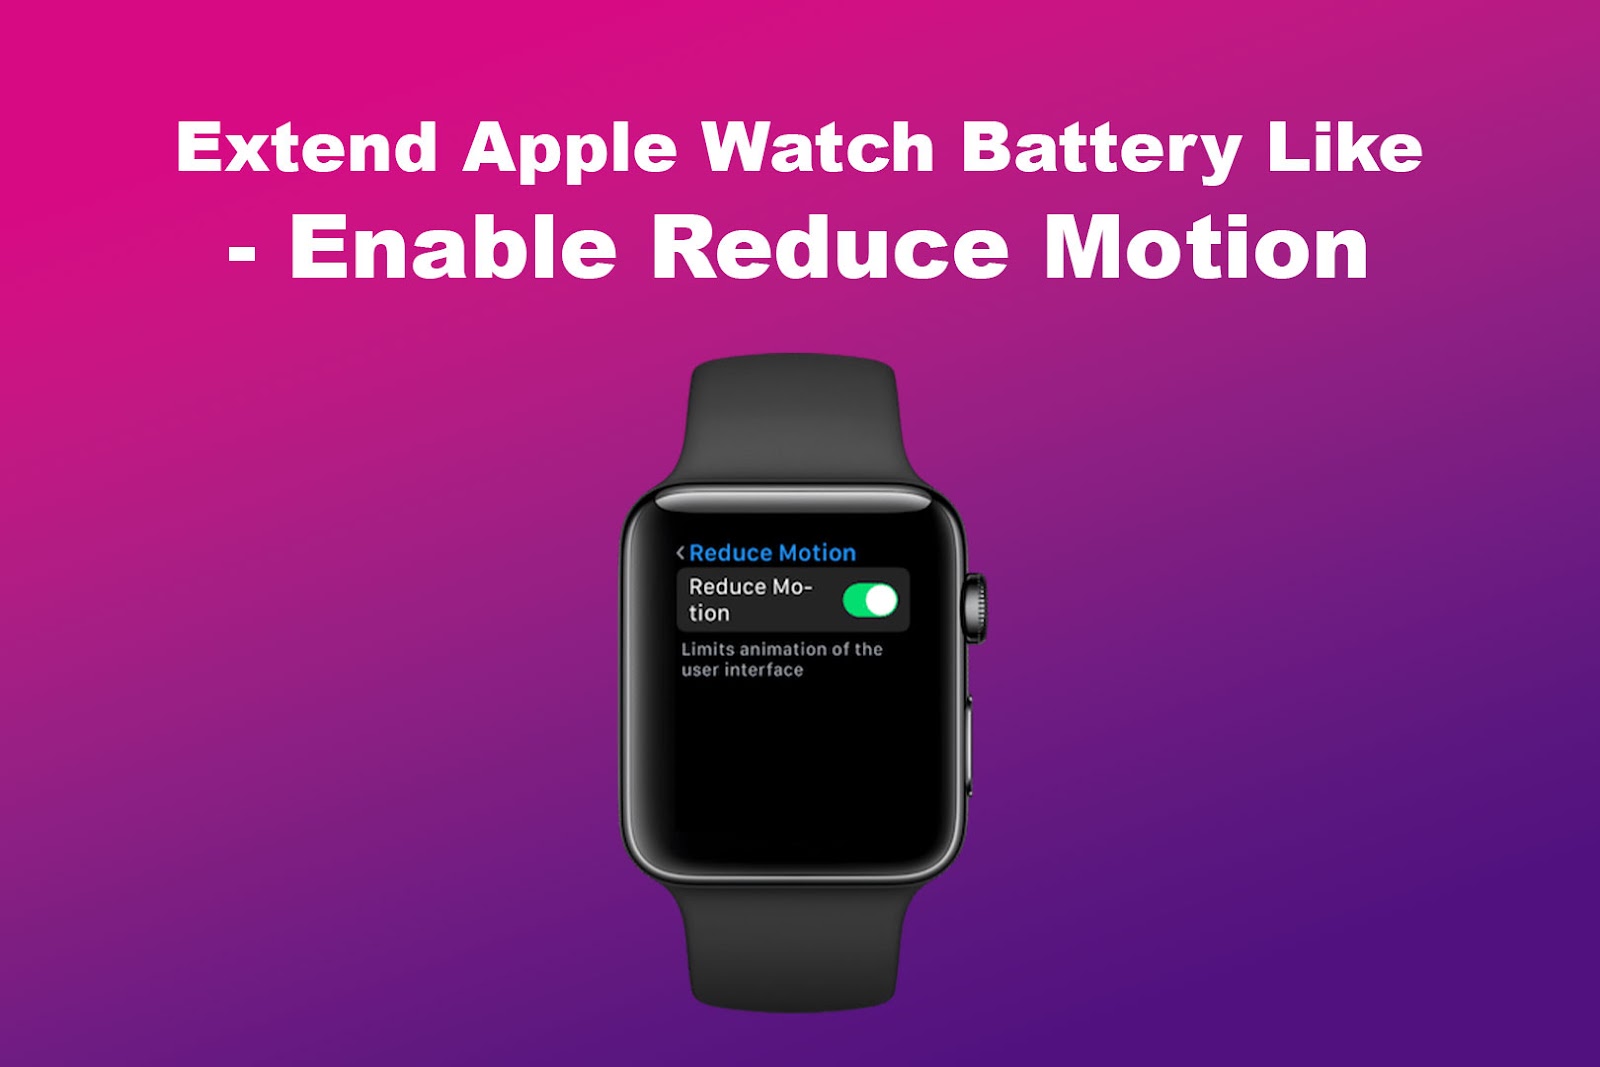 Extend Apple Watch Battery Like - Enable Reduce Motion